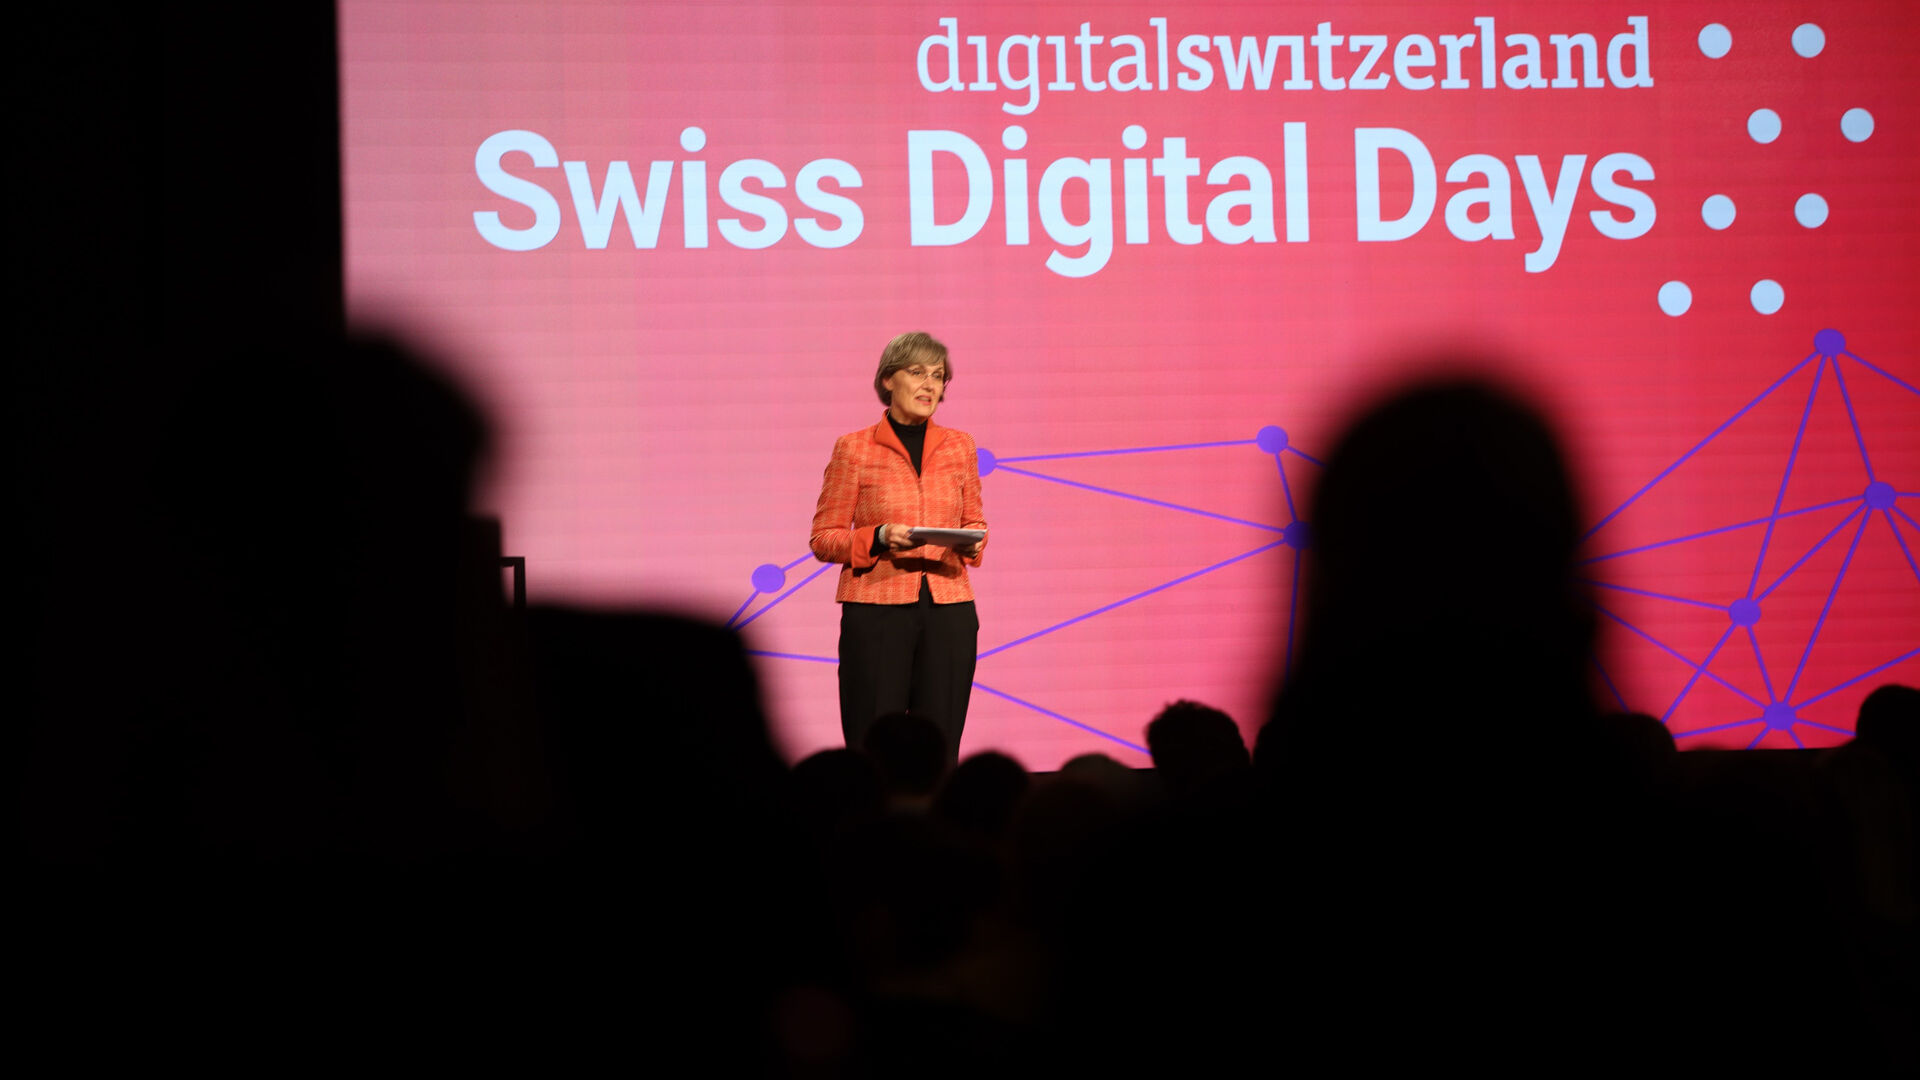 Swiss Digital Days: 2022월 27일 Zug의 Freiruum에서 열리는 "Swiss Digital Days" XNUMX 폐막 행사